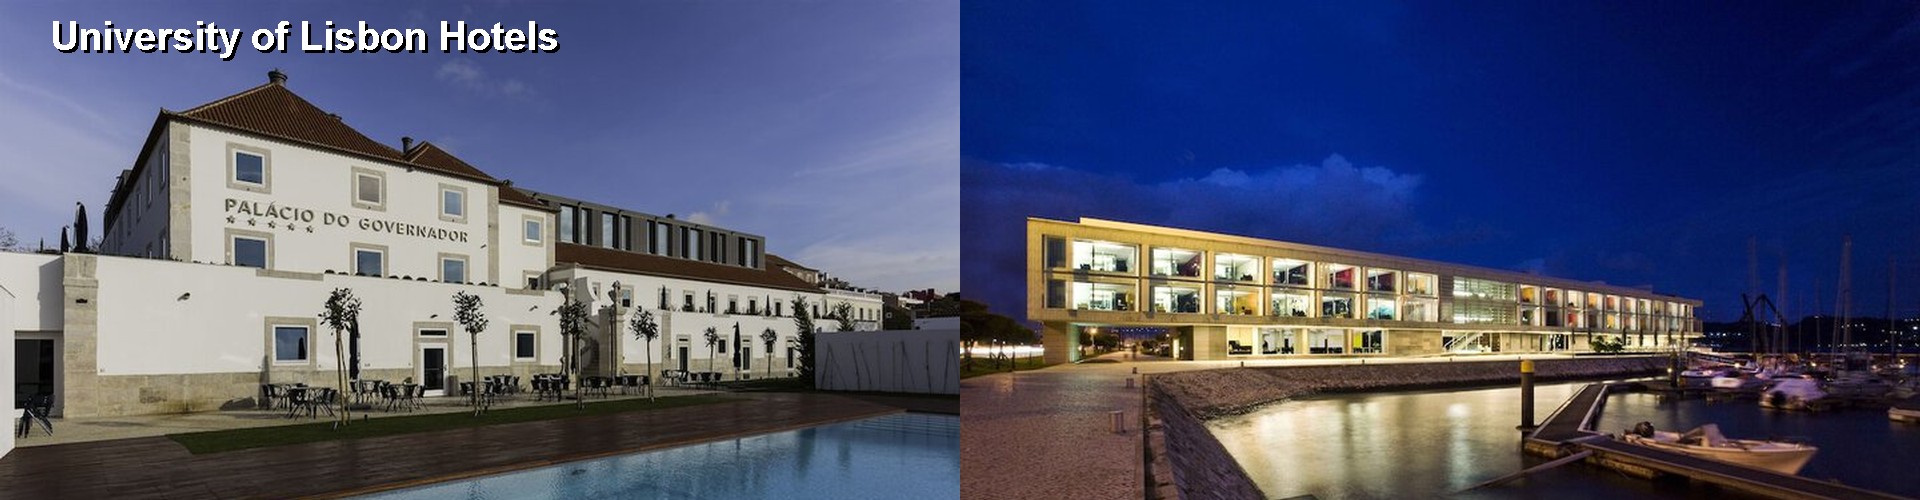 5 Best Hotels near University of Lisbon